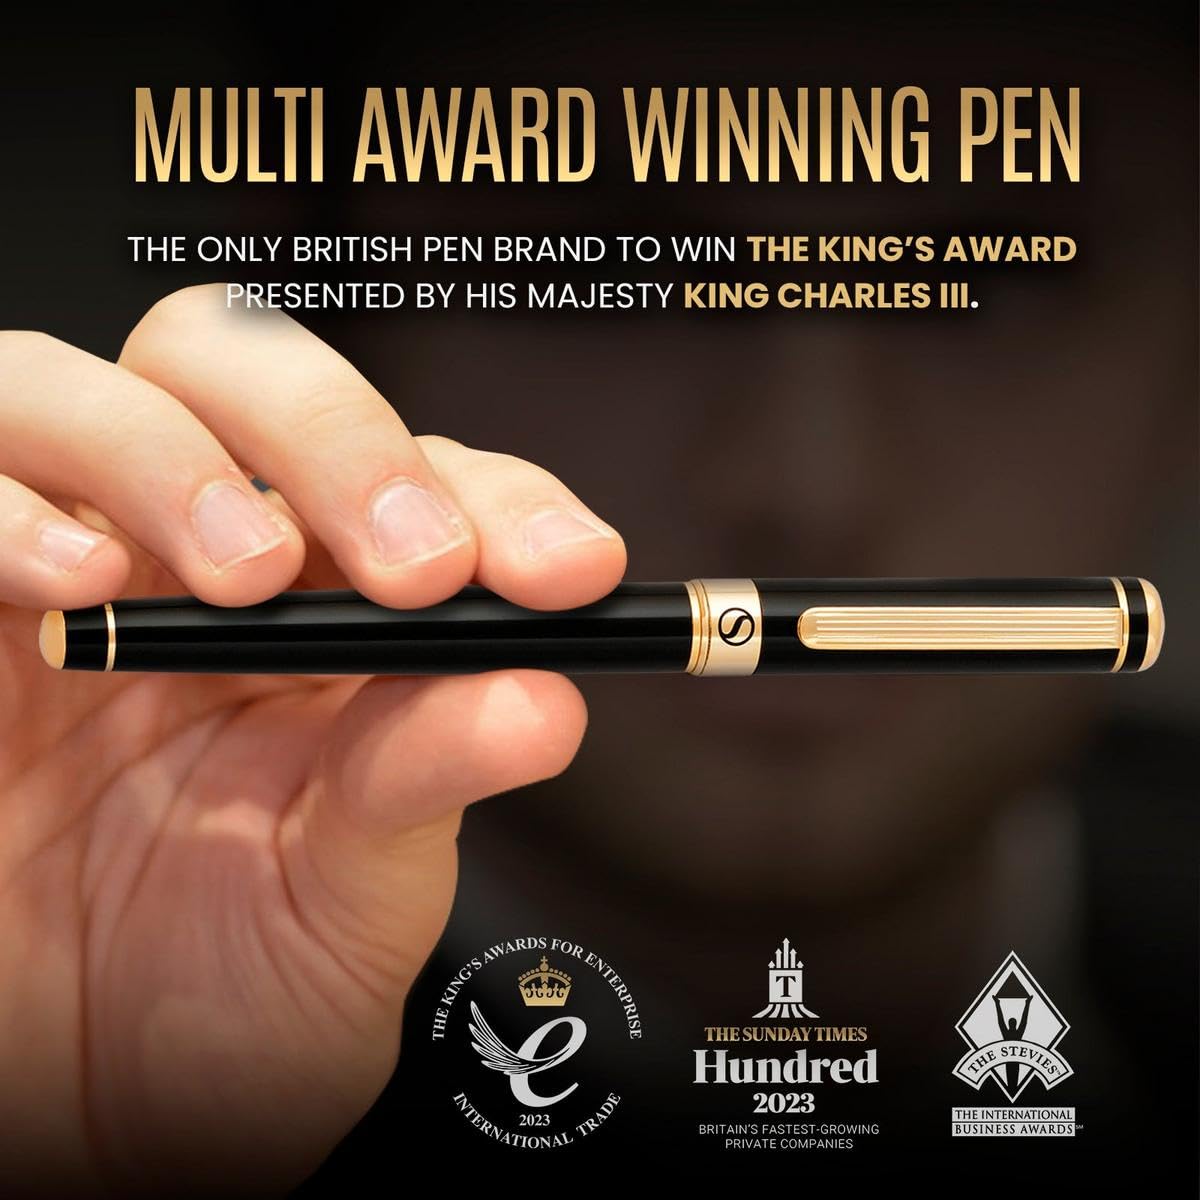 Scriveiner Black Lacquer Rollerball Pen - Stunning Luxury Pen with 24K Gold Finish, Schmidt Ink Refill, Best Roller Ball Pen Gift Set for Men & Women